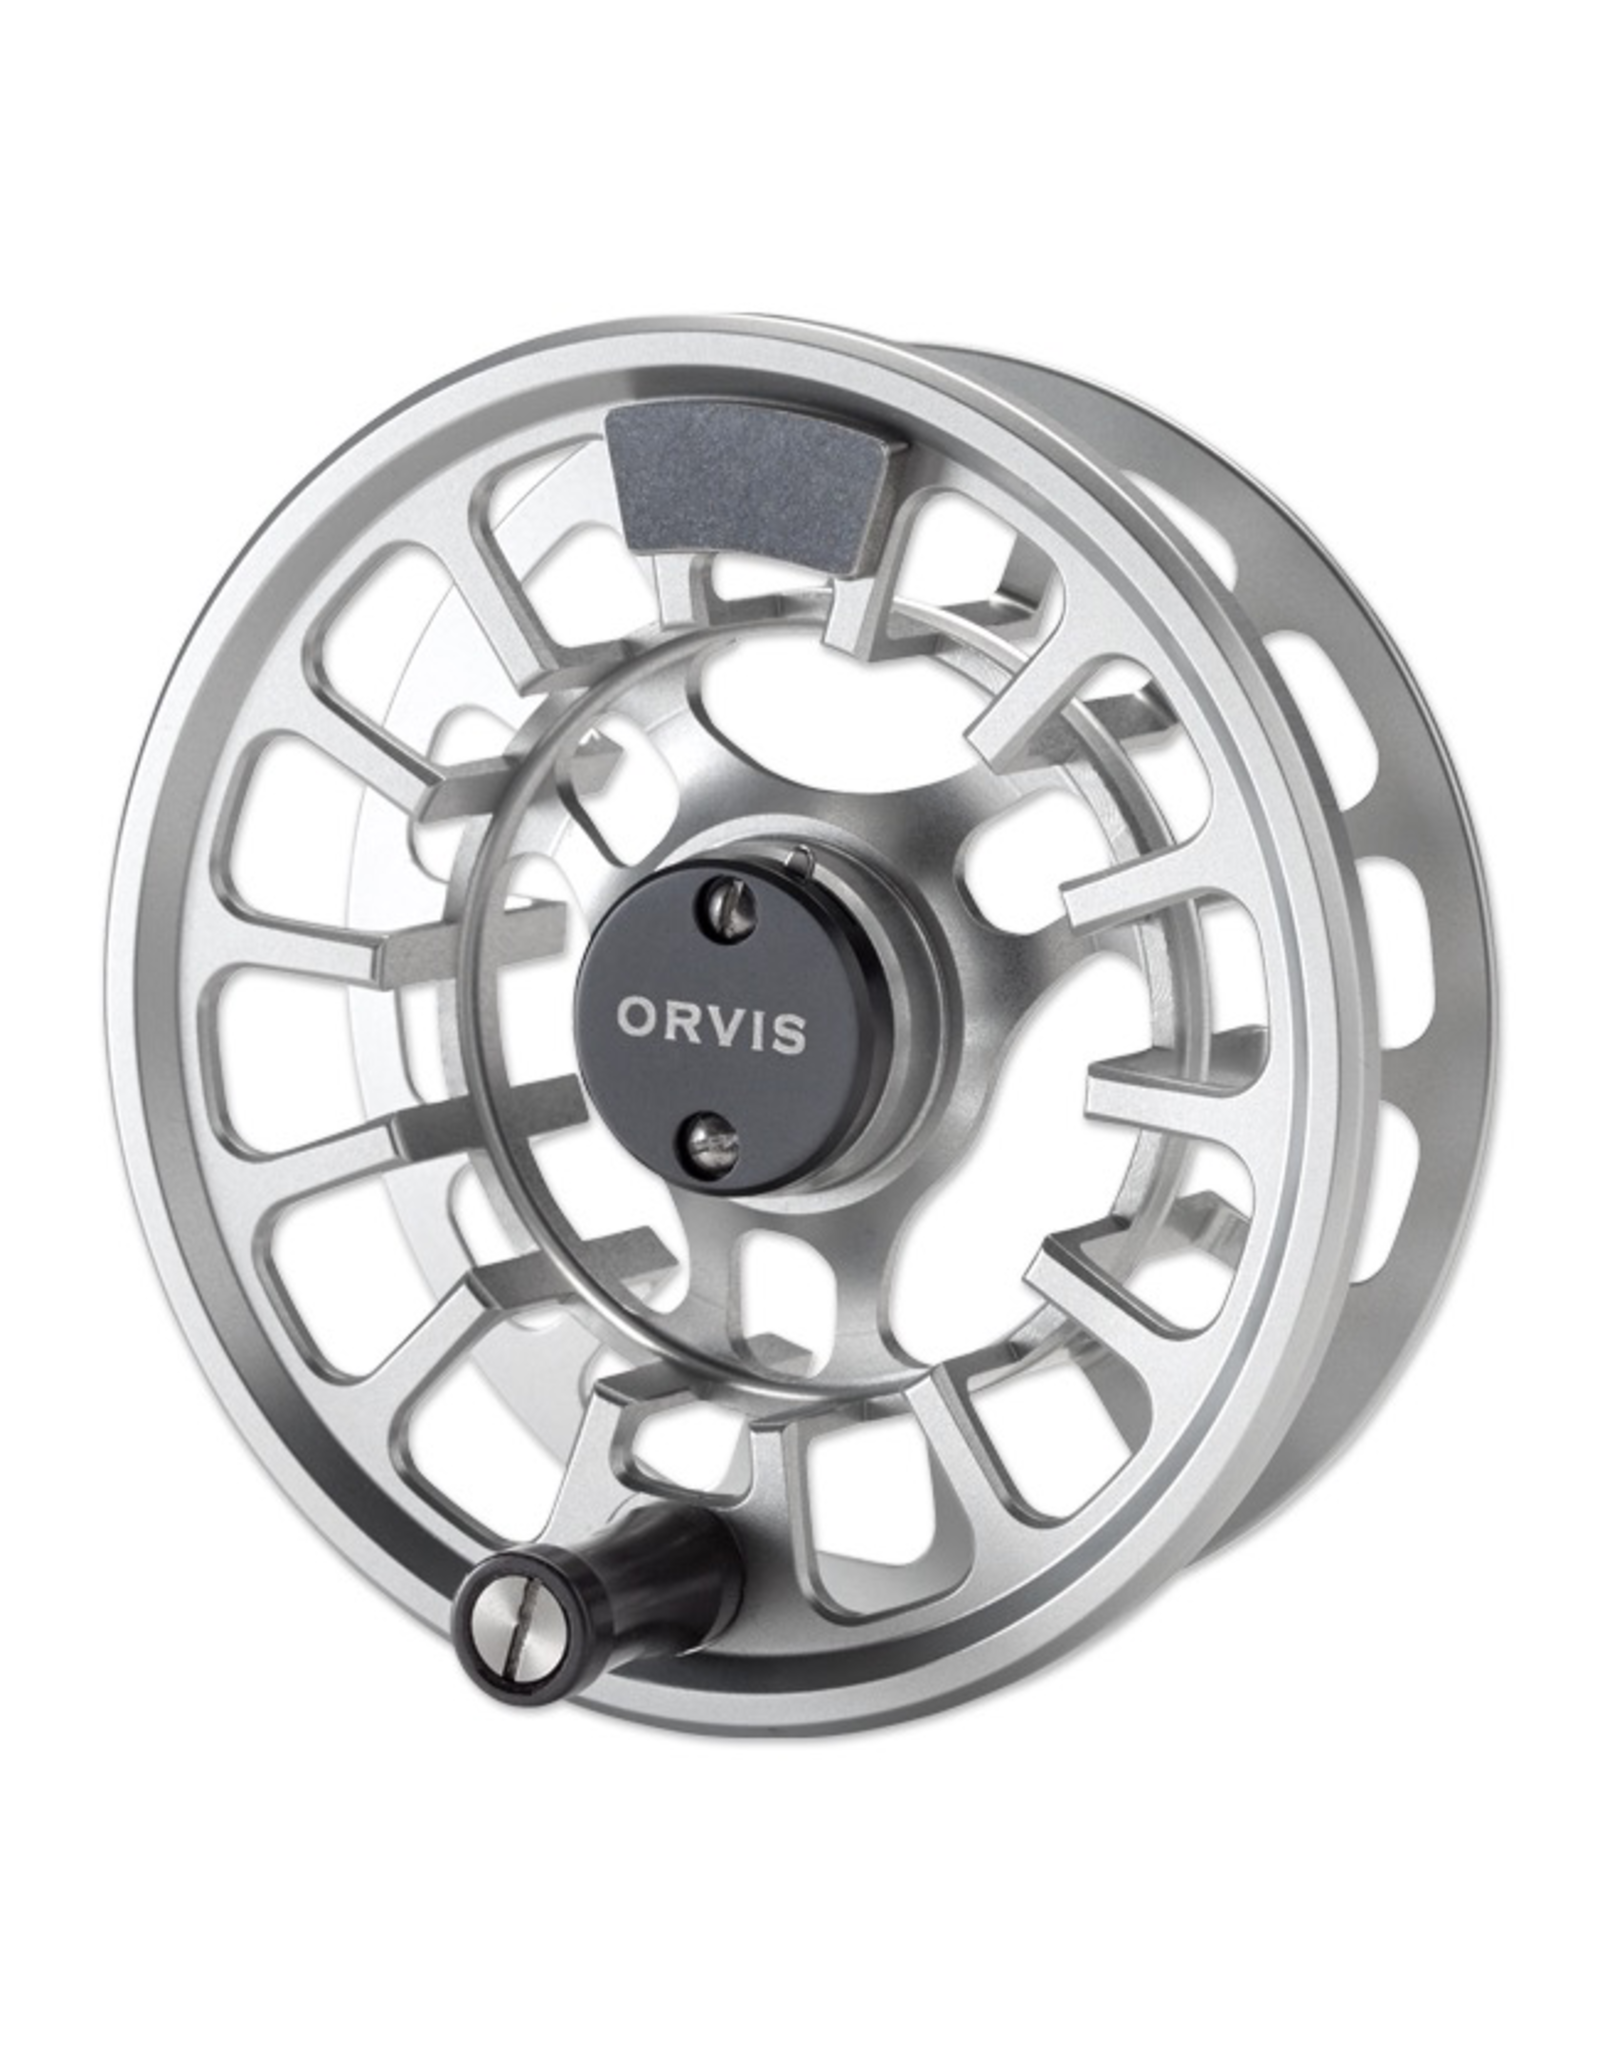 Orvis NEW ORVIS Hydros II Reel (Silver) 3-5wt